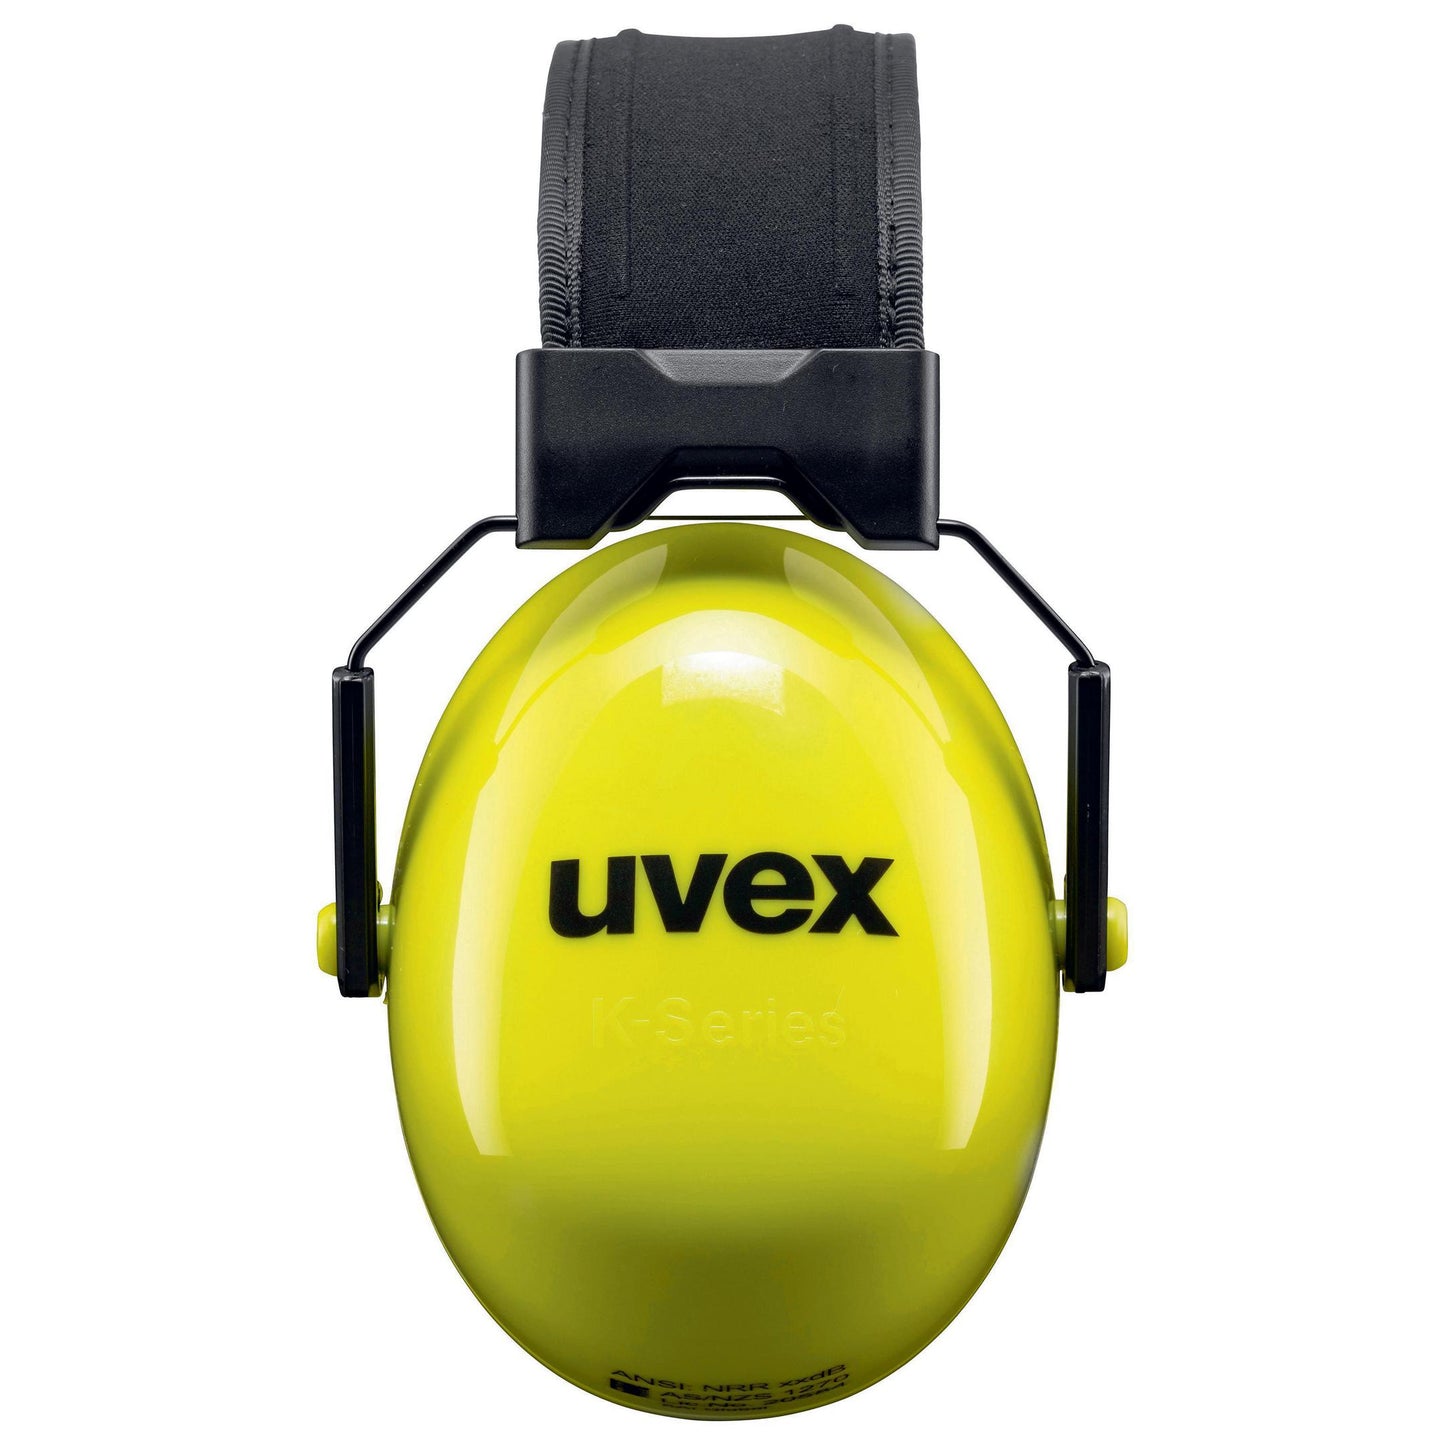 uvex K20 HiViz Kapselgehörschutz SNR 33 dB